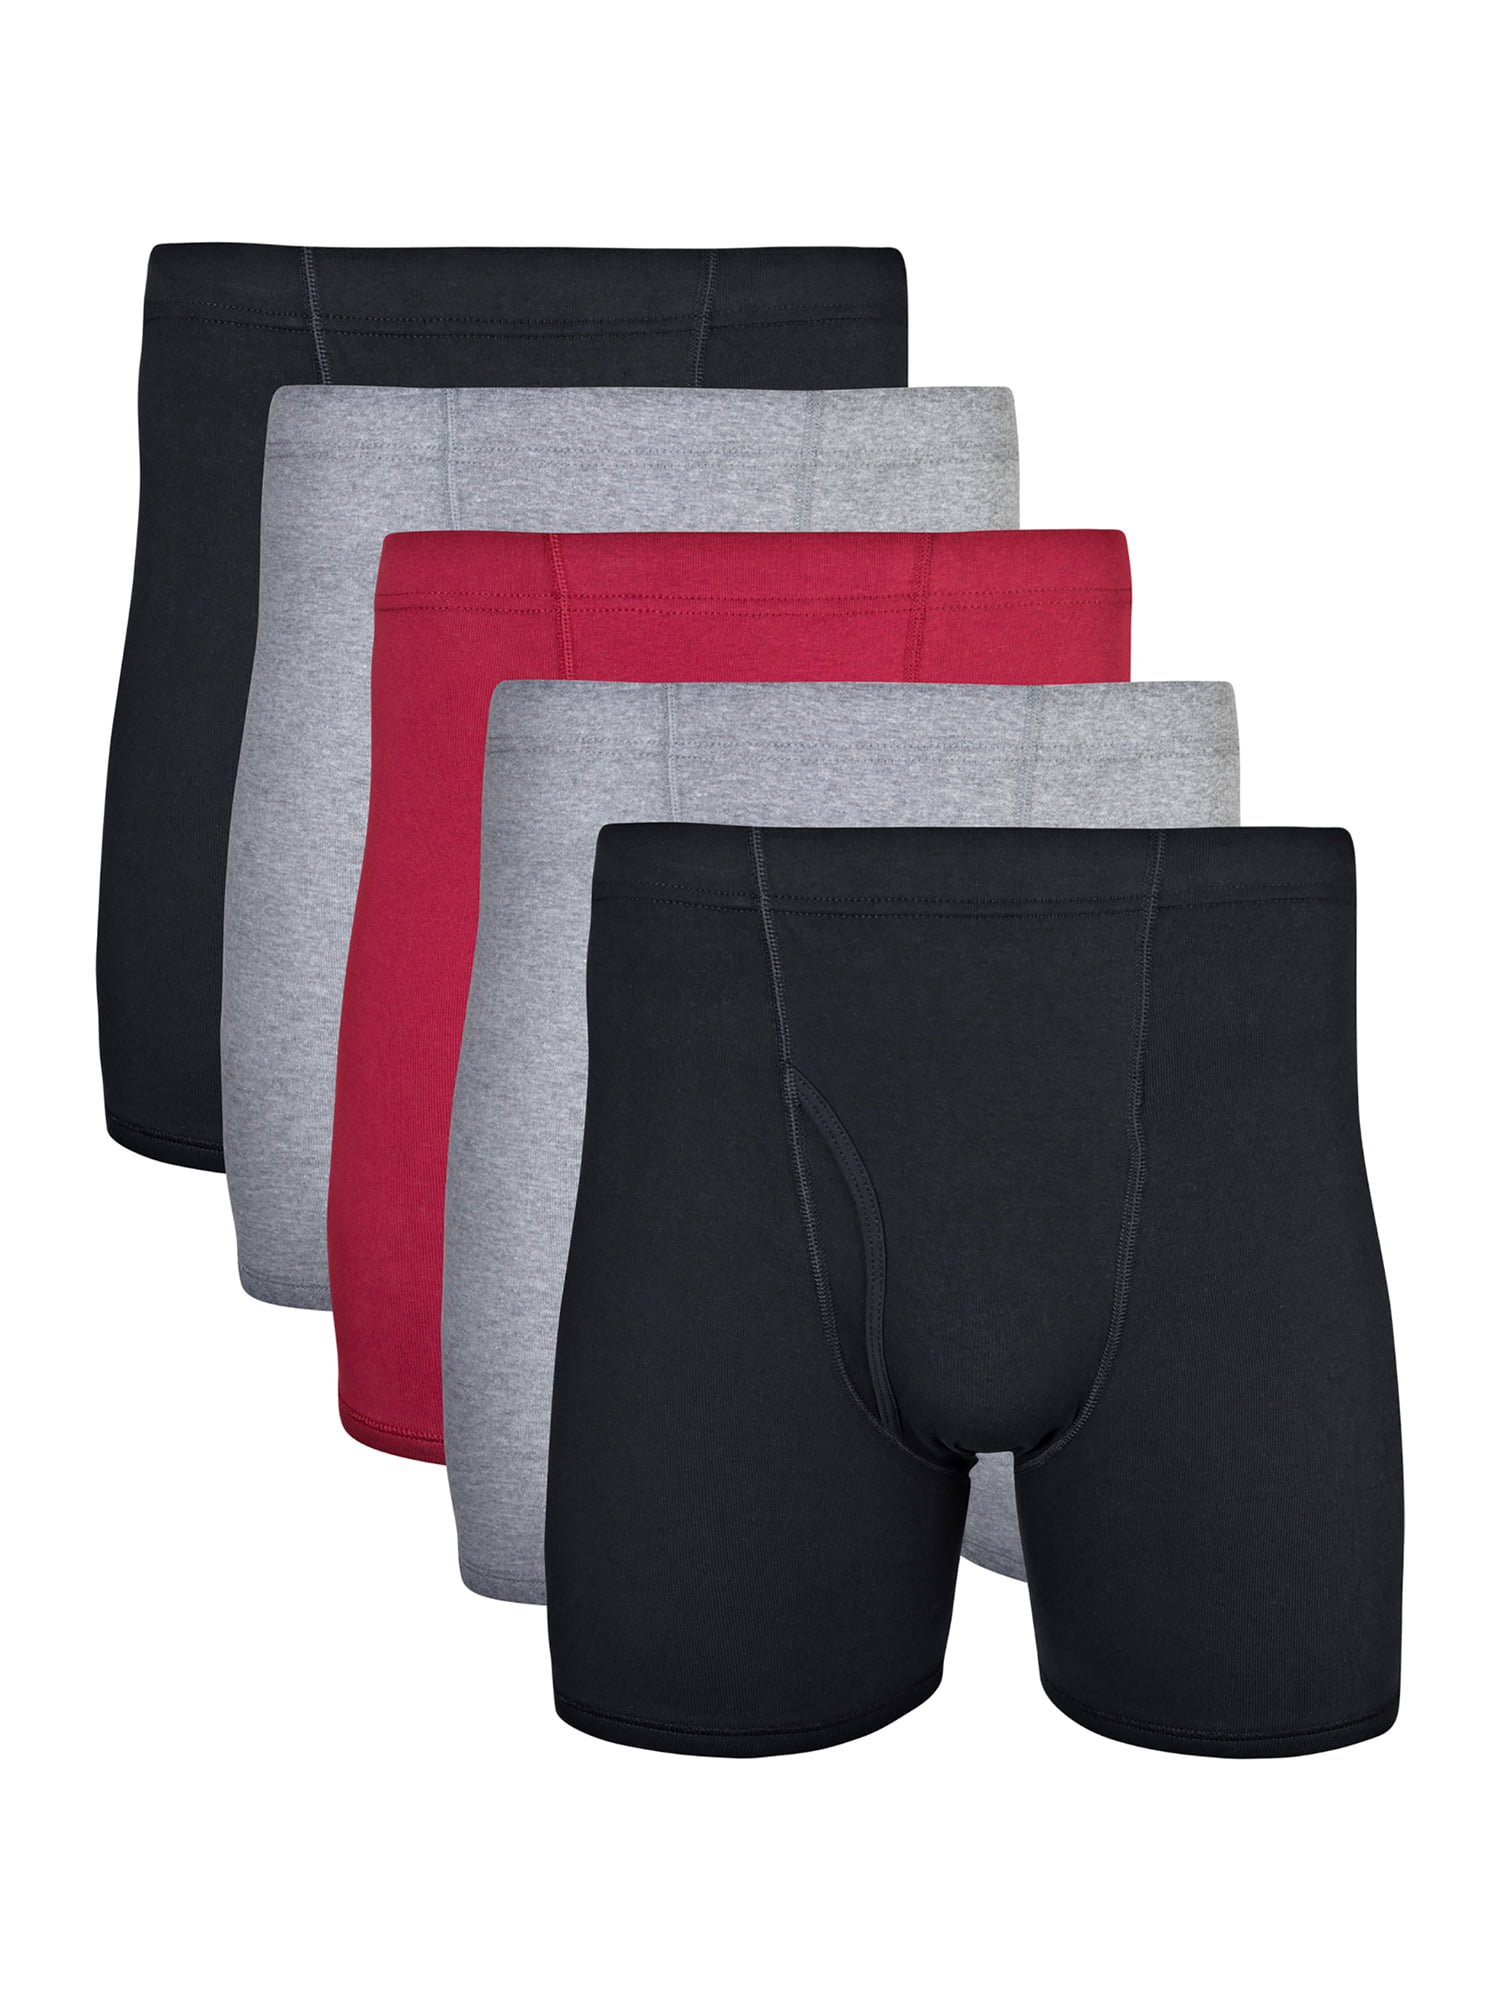 6 Pack Mens Boxer Shorts Underwear Solid Boxers Briefs Trunks Underpants S-2XL 